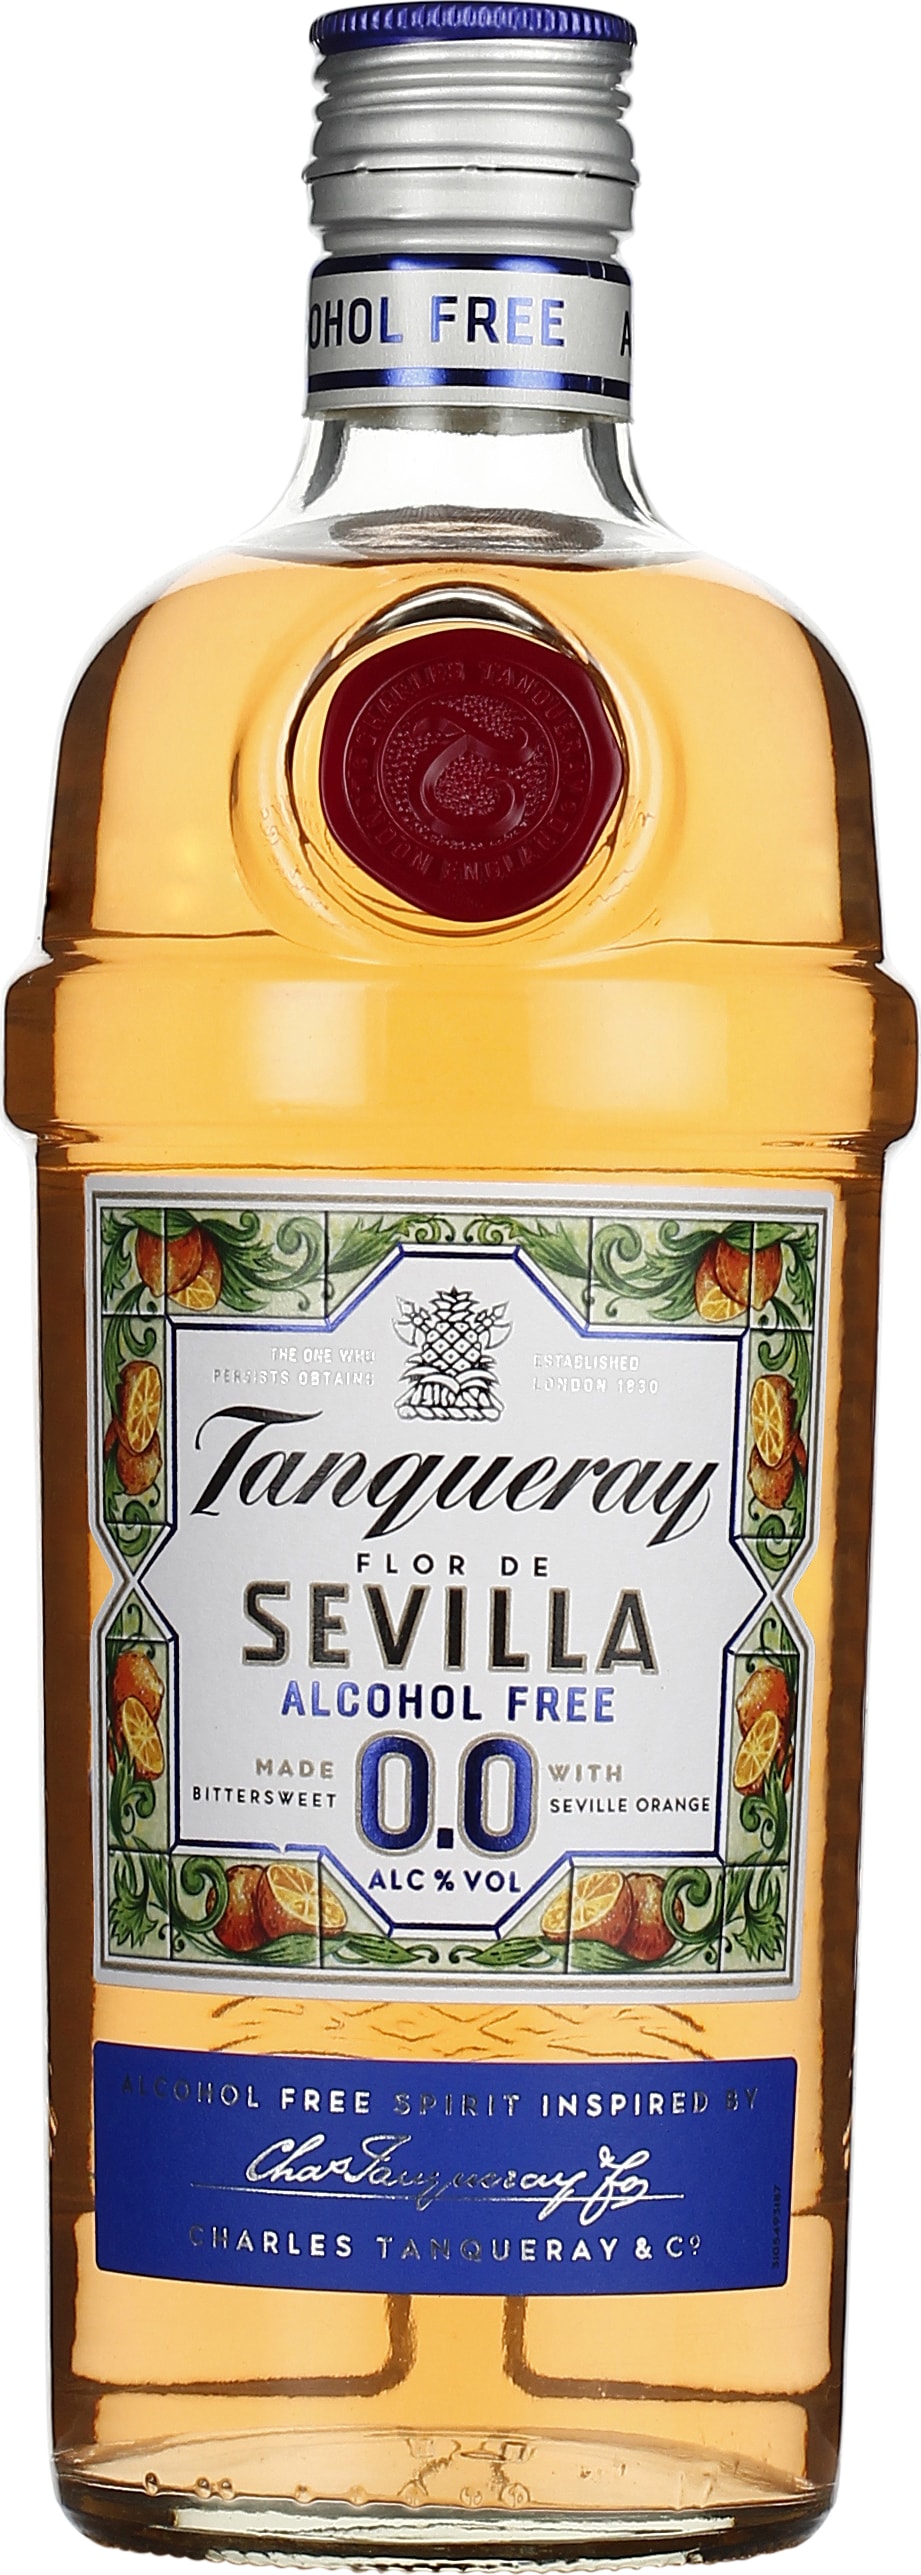 Drankdozijn Tanqueray Flor de Sevilla 0.0% Alcohol Free Spirit 70CL aanbieding